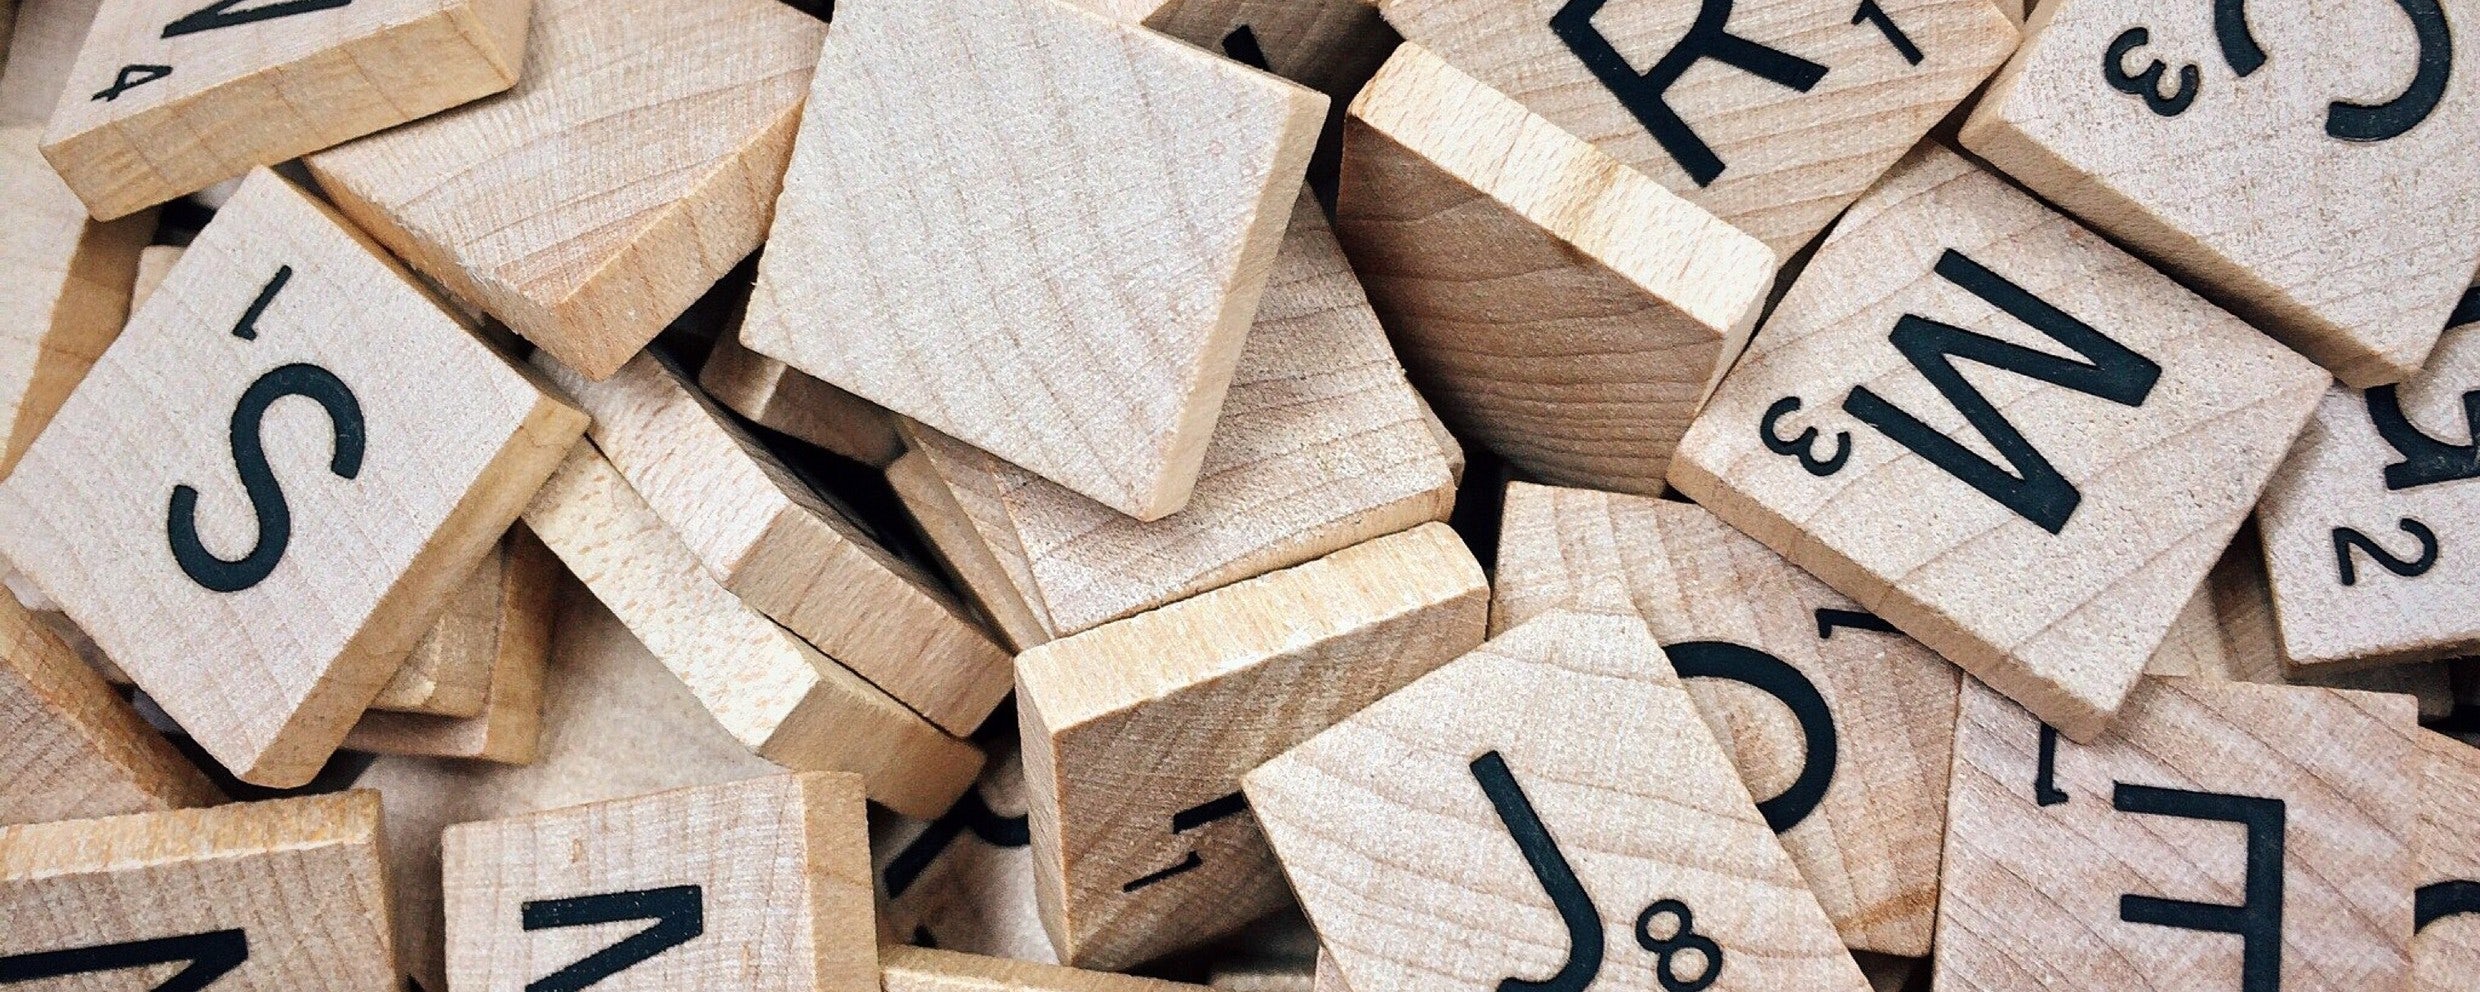 Pile of Scrabble letters